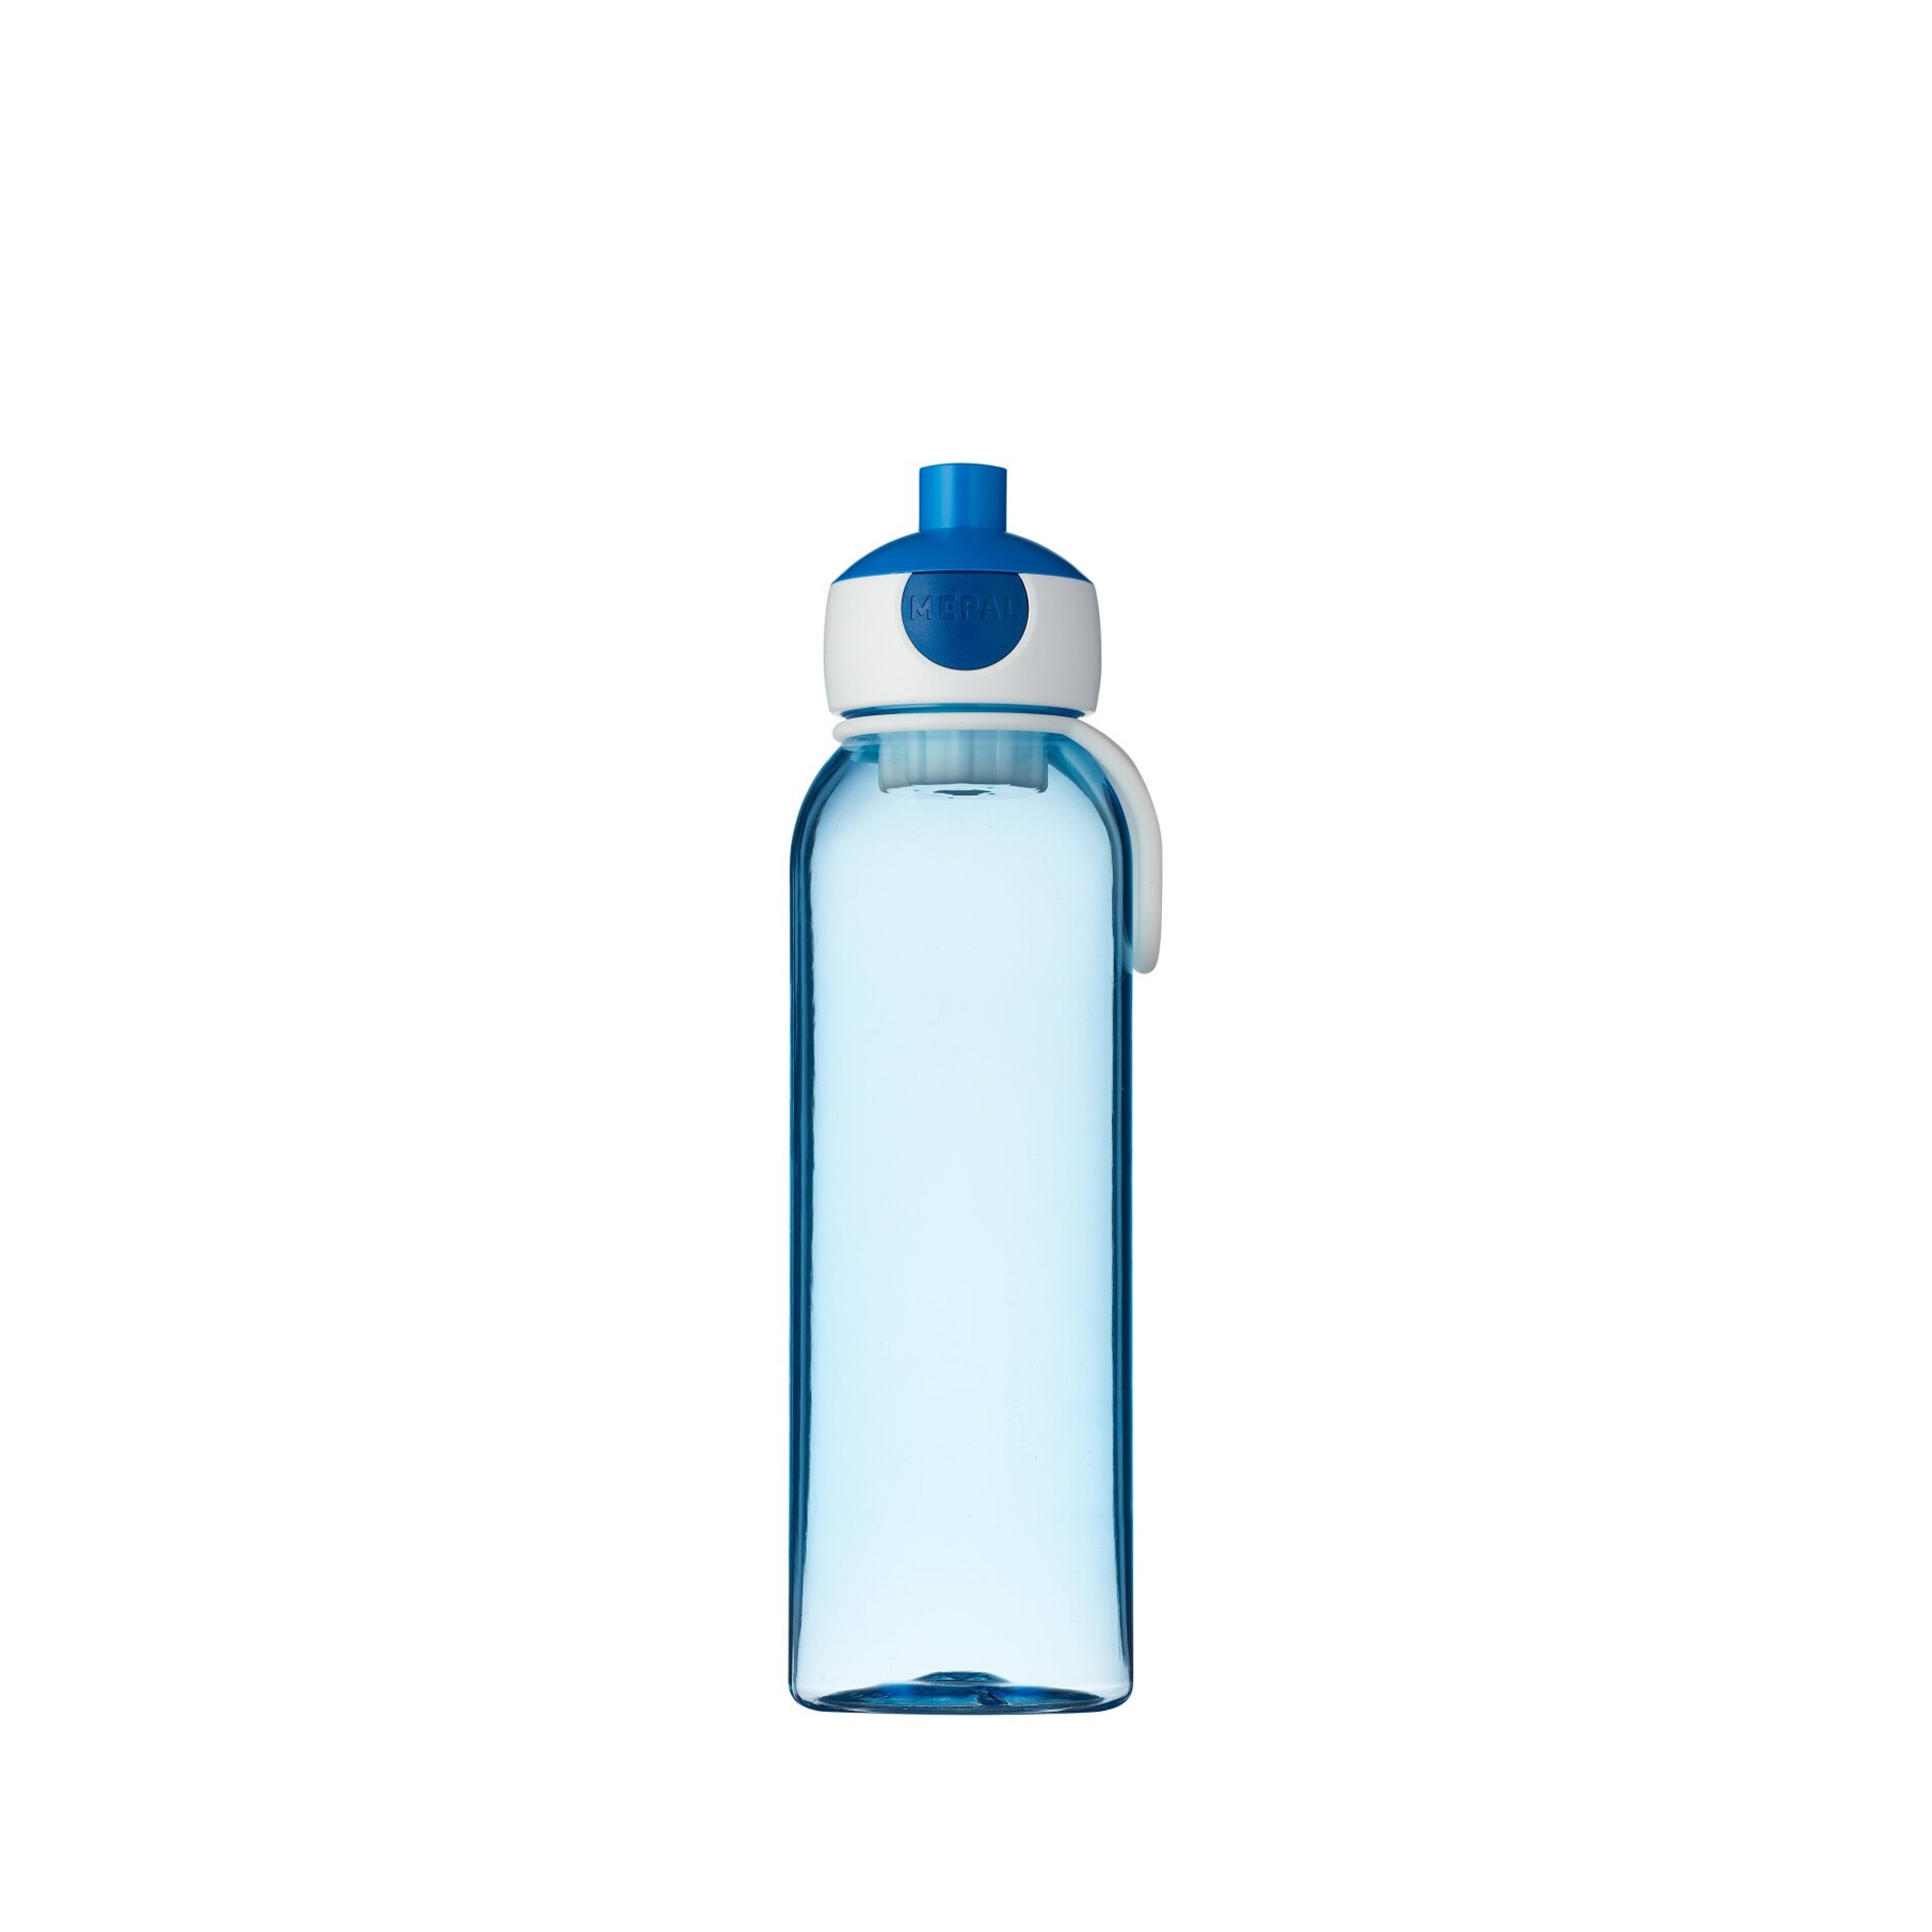 Mepal - Campus water bottle pop-up 500 ml - various colors